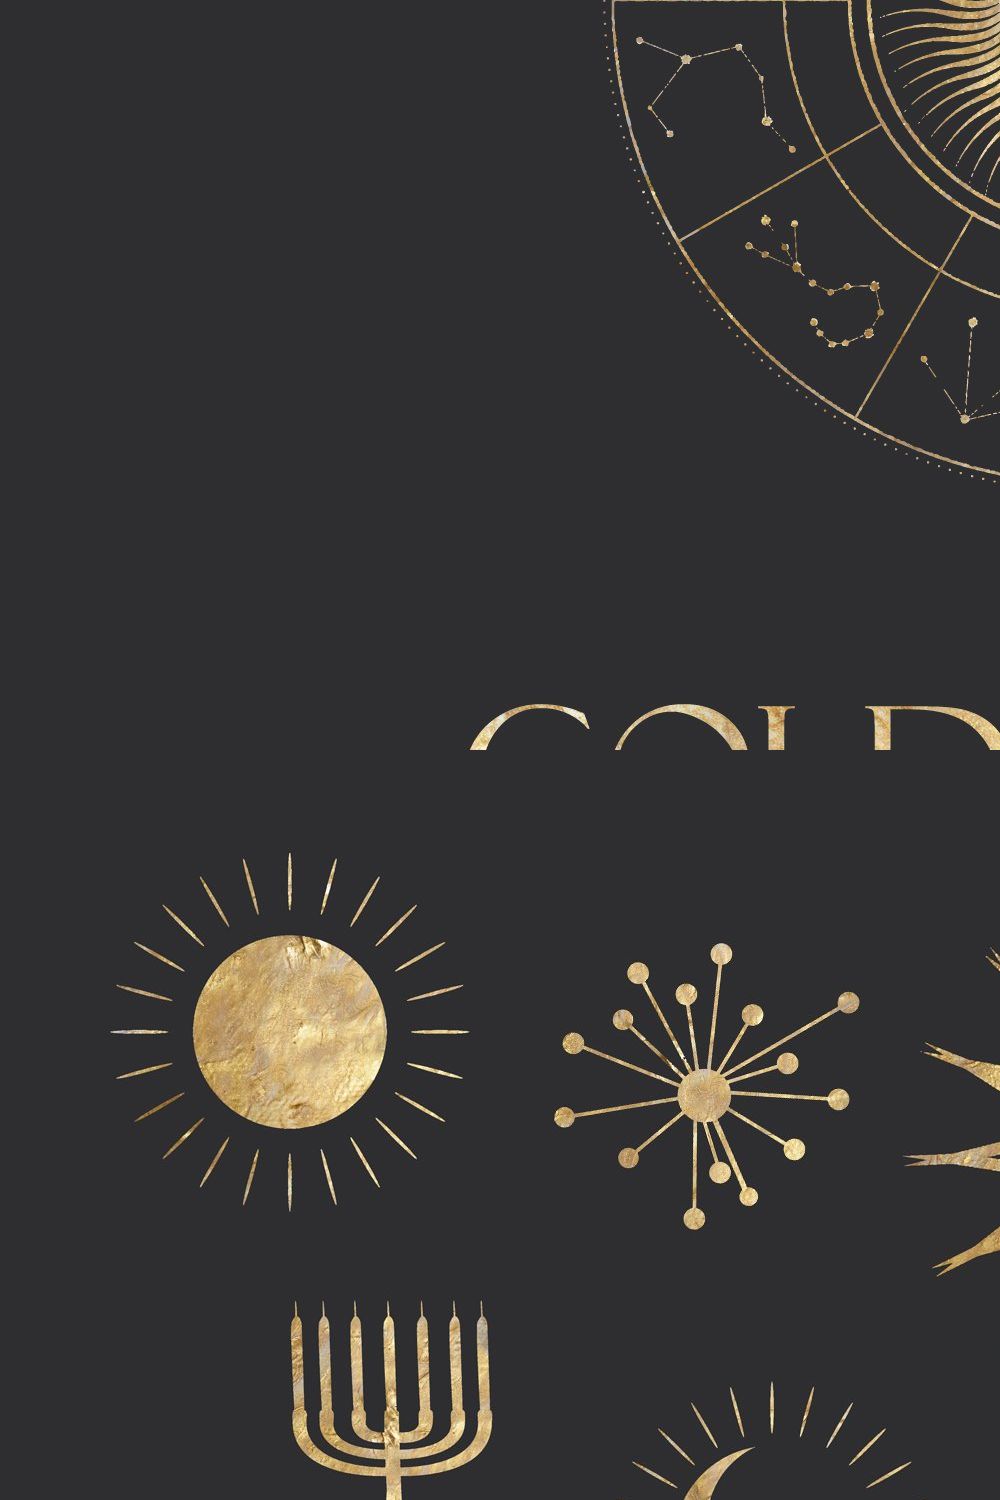 Gold Sun - moon - zodiac pinterest preview image.